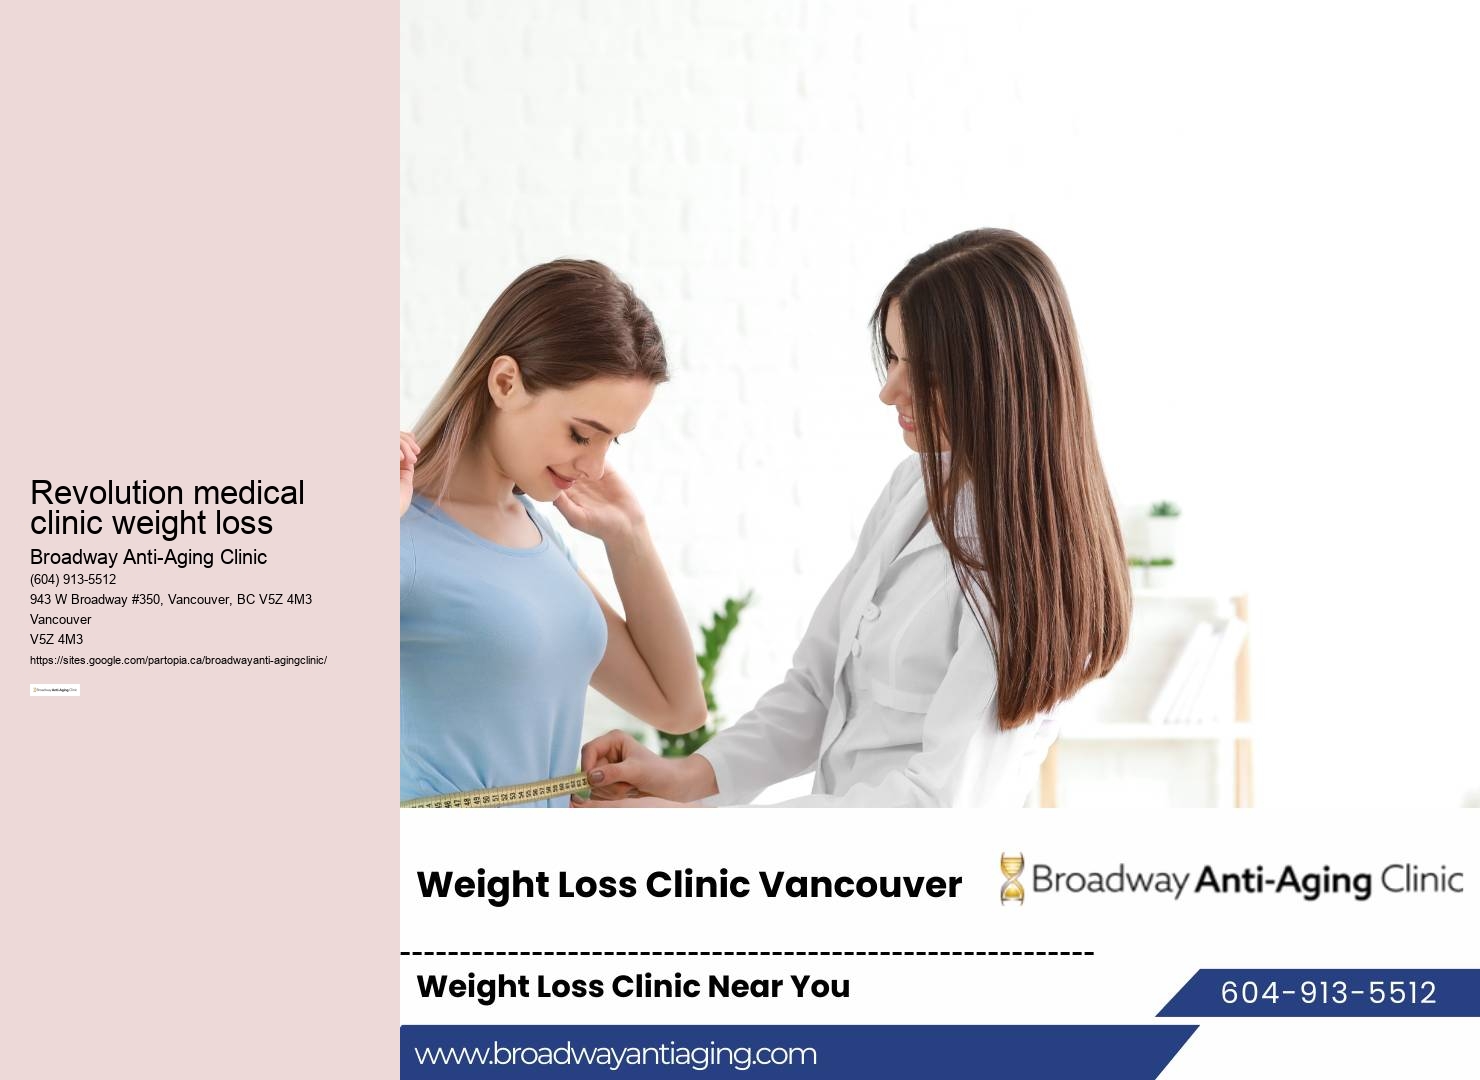 Revolution medical clinic weight loss